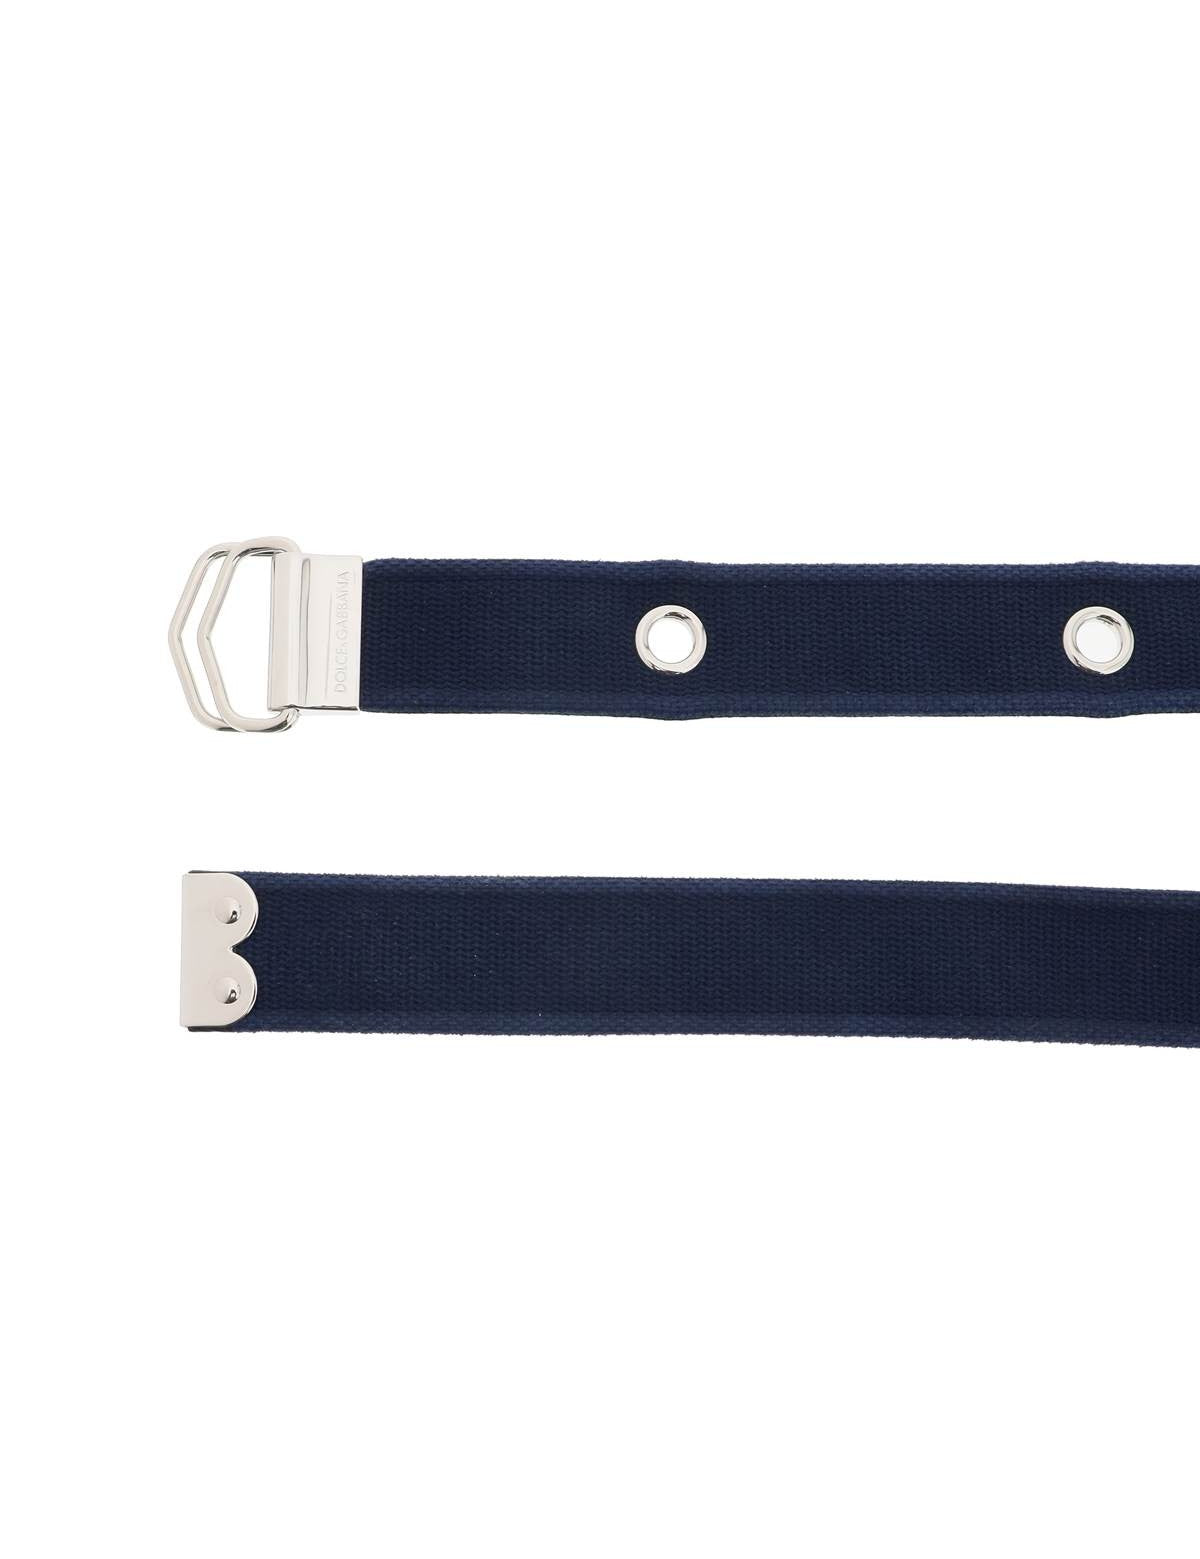 dolce-gabbana-logo-tape-belt-in-ribbon_40ded52a-8583-4878-8611-1602116858ed.jpg